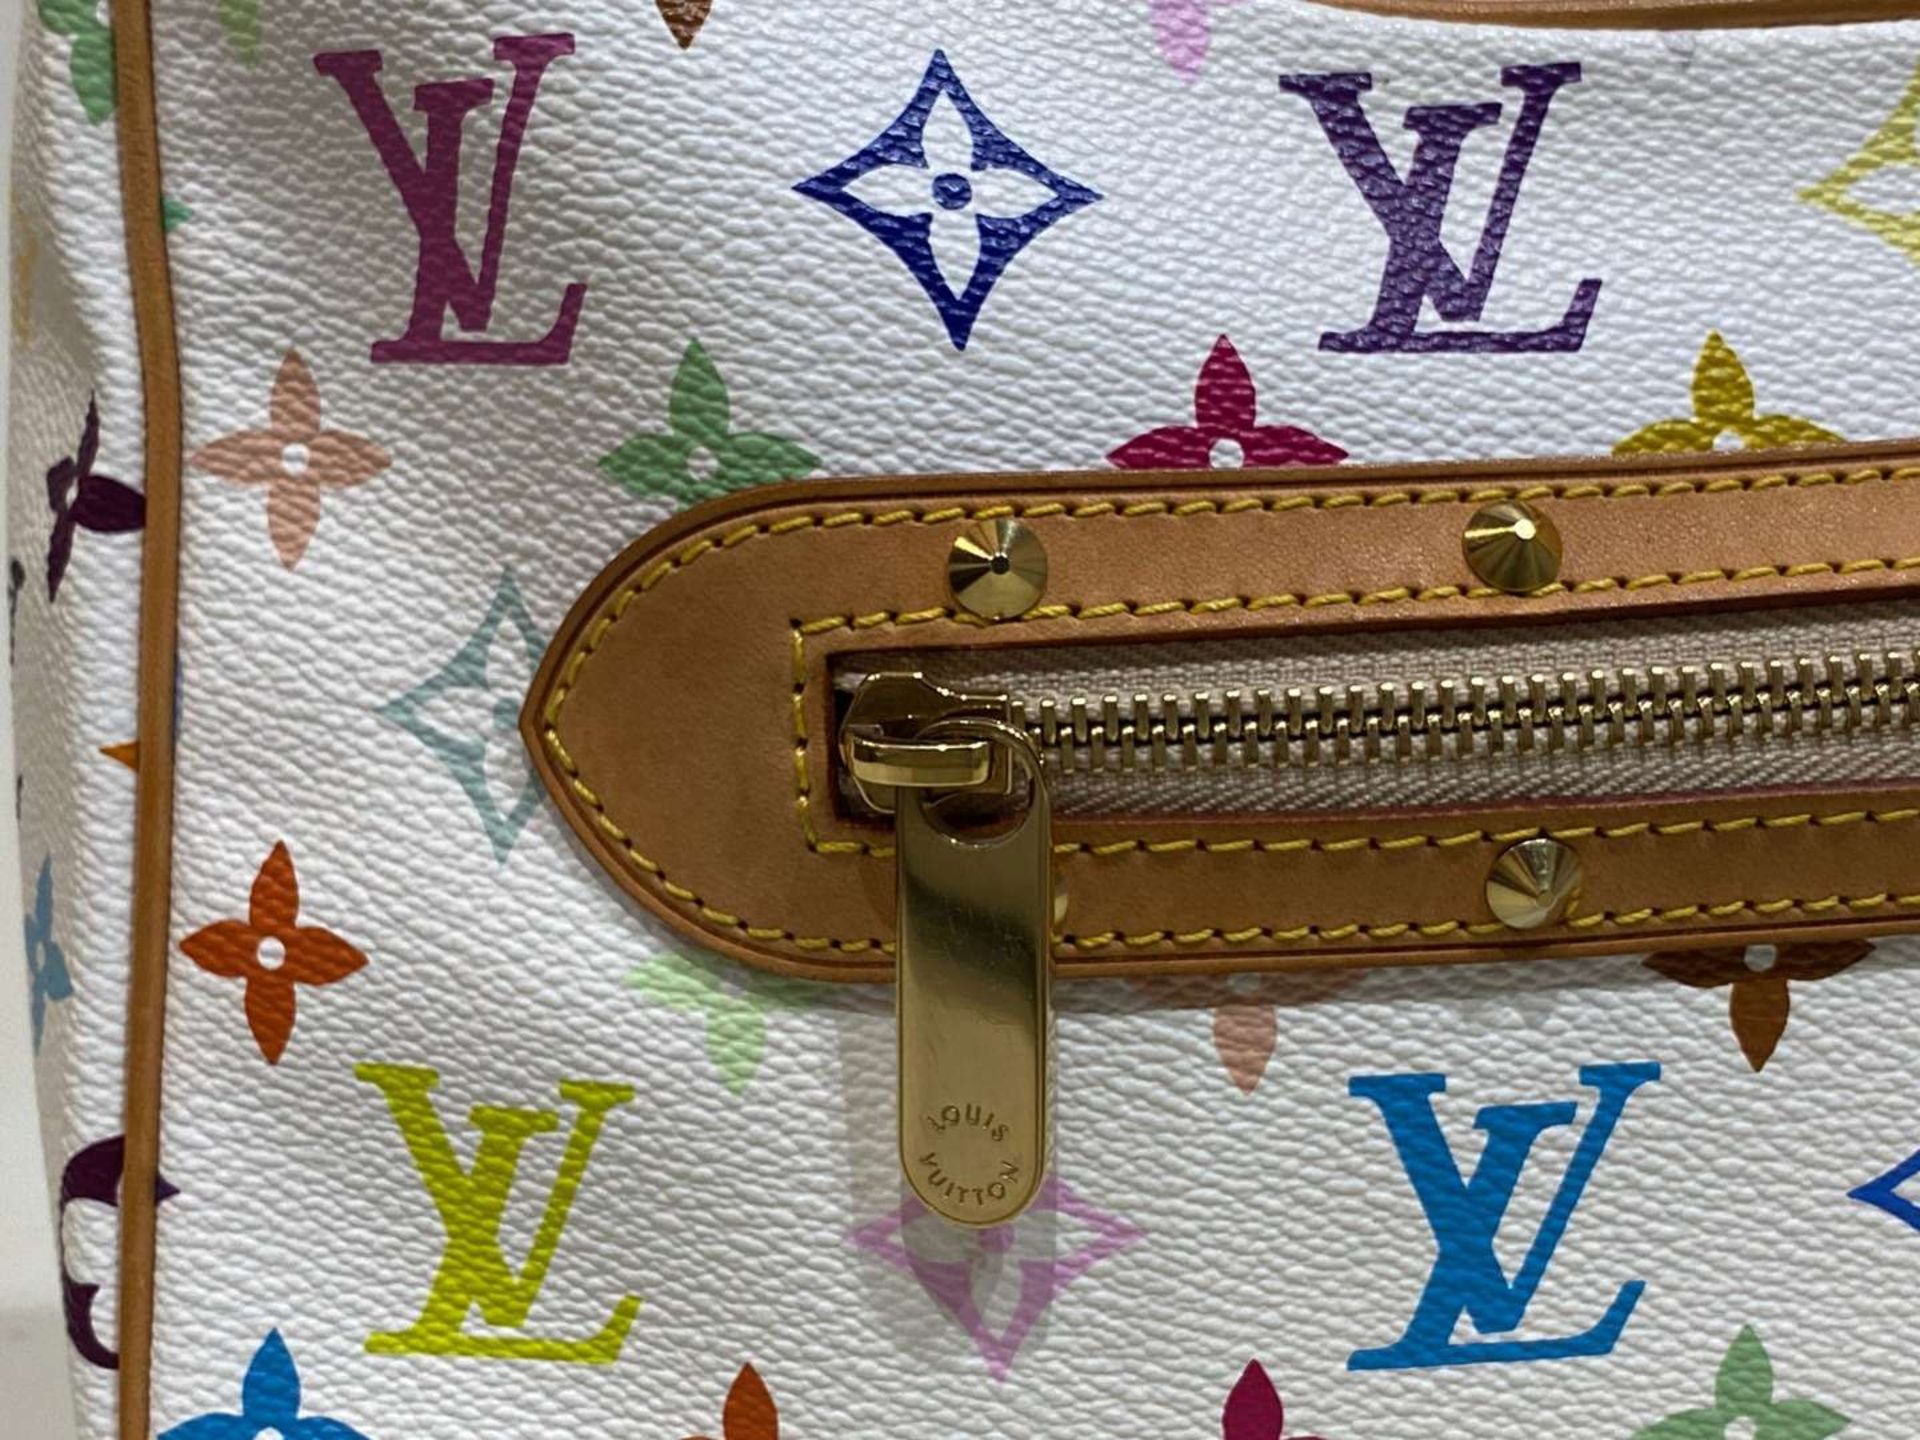 LOUIS VUITTON, Boulogne, leather, multicolour monogrammed, crossbody bag, Le Takashi Murakami - Image 9 of 9